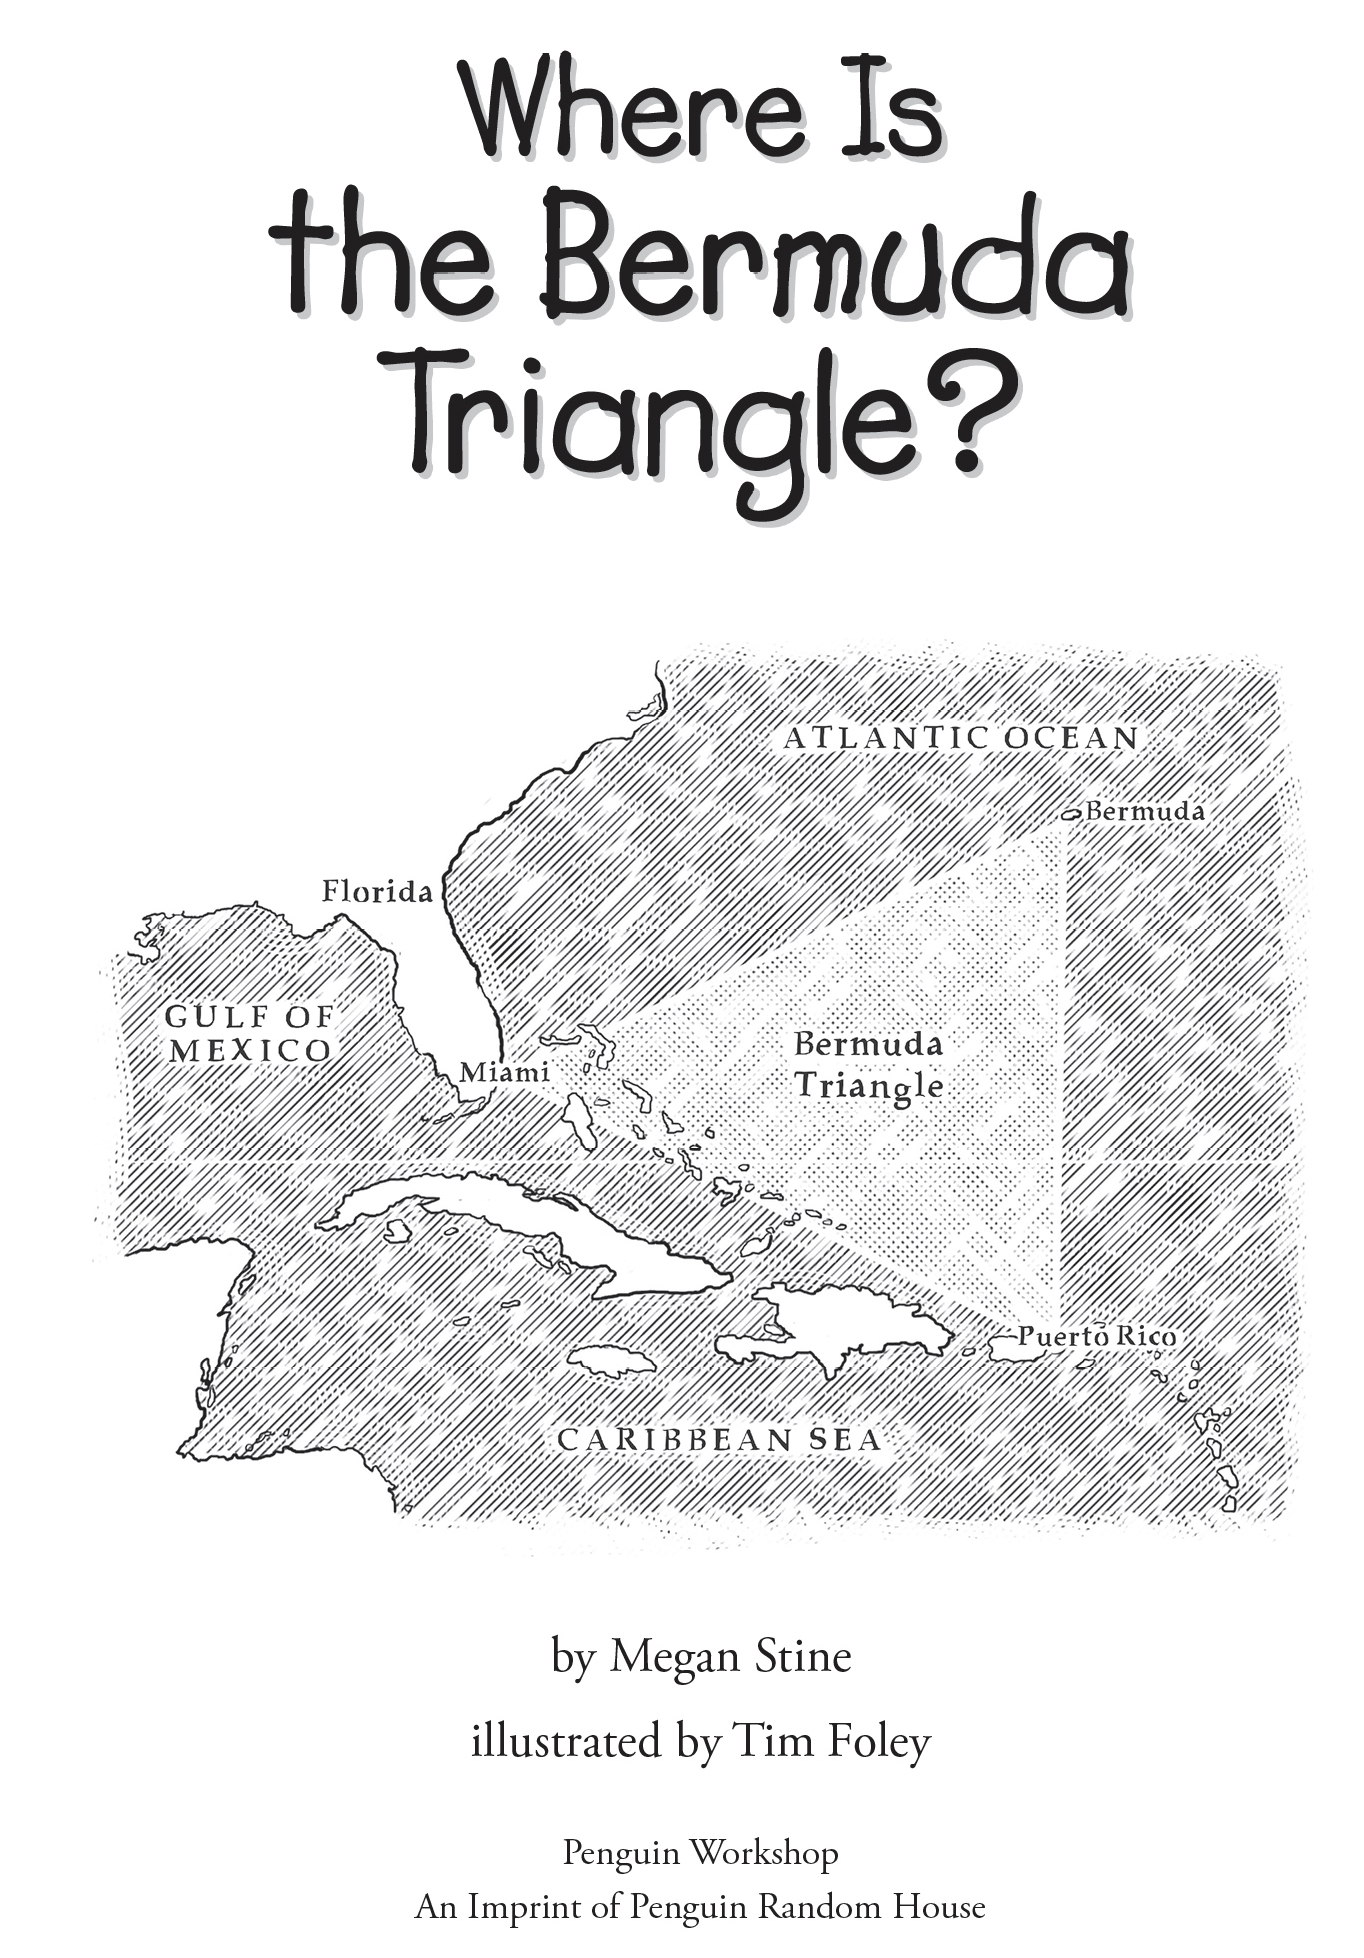 Book title, Where Is the Bermuda Triangle?, author, Megan Stine, imprint, Penguin Workshop